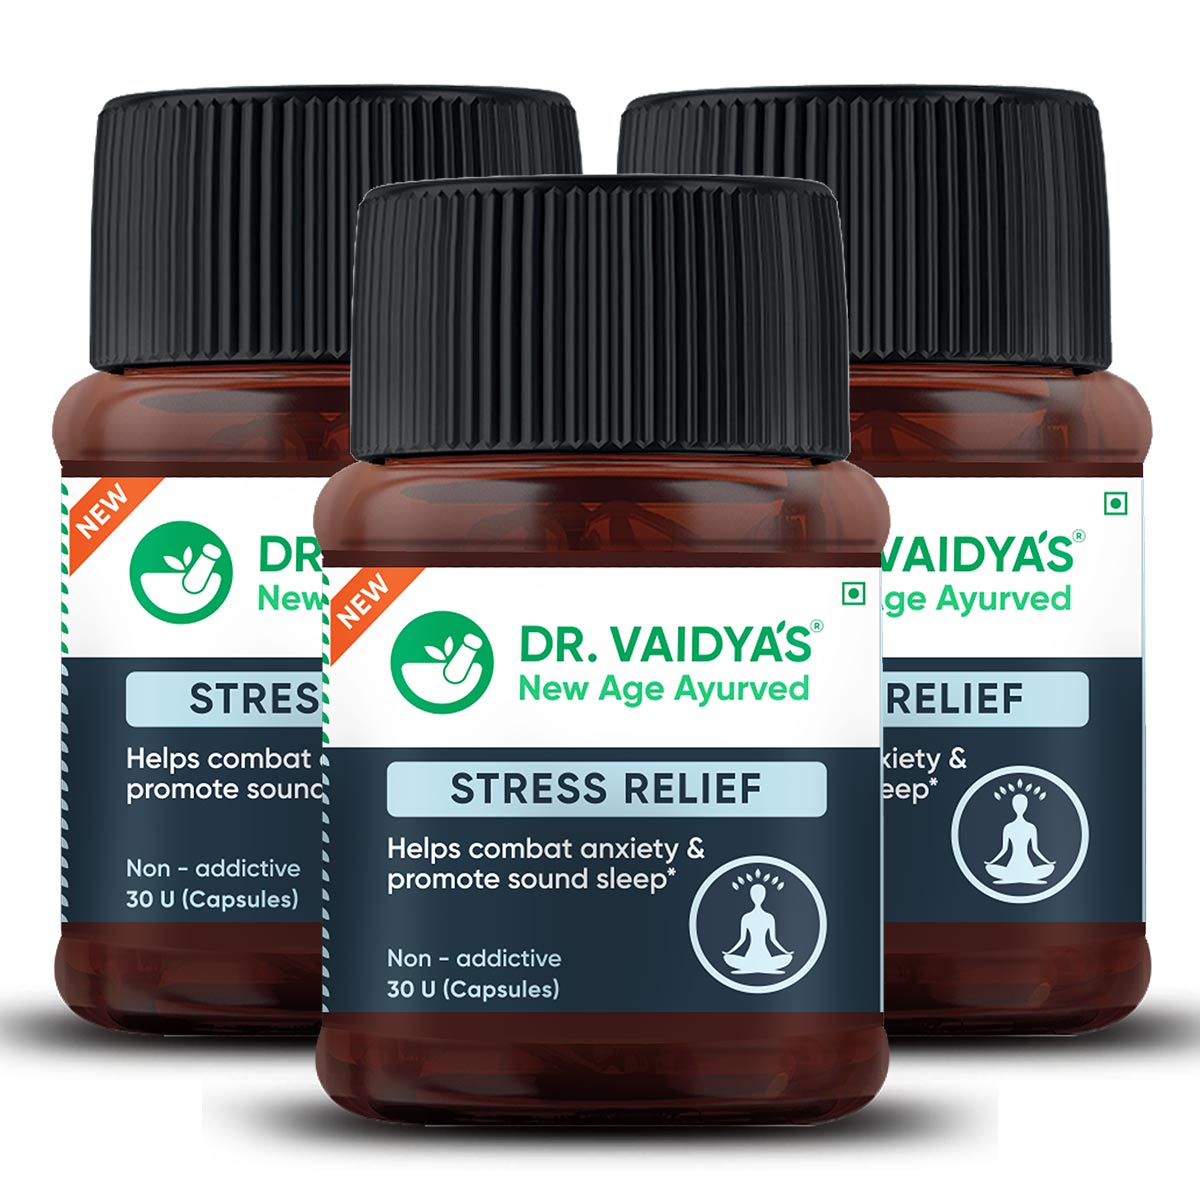 Dr. Vaidya's Stress Relief